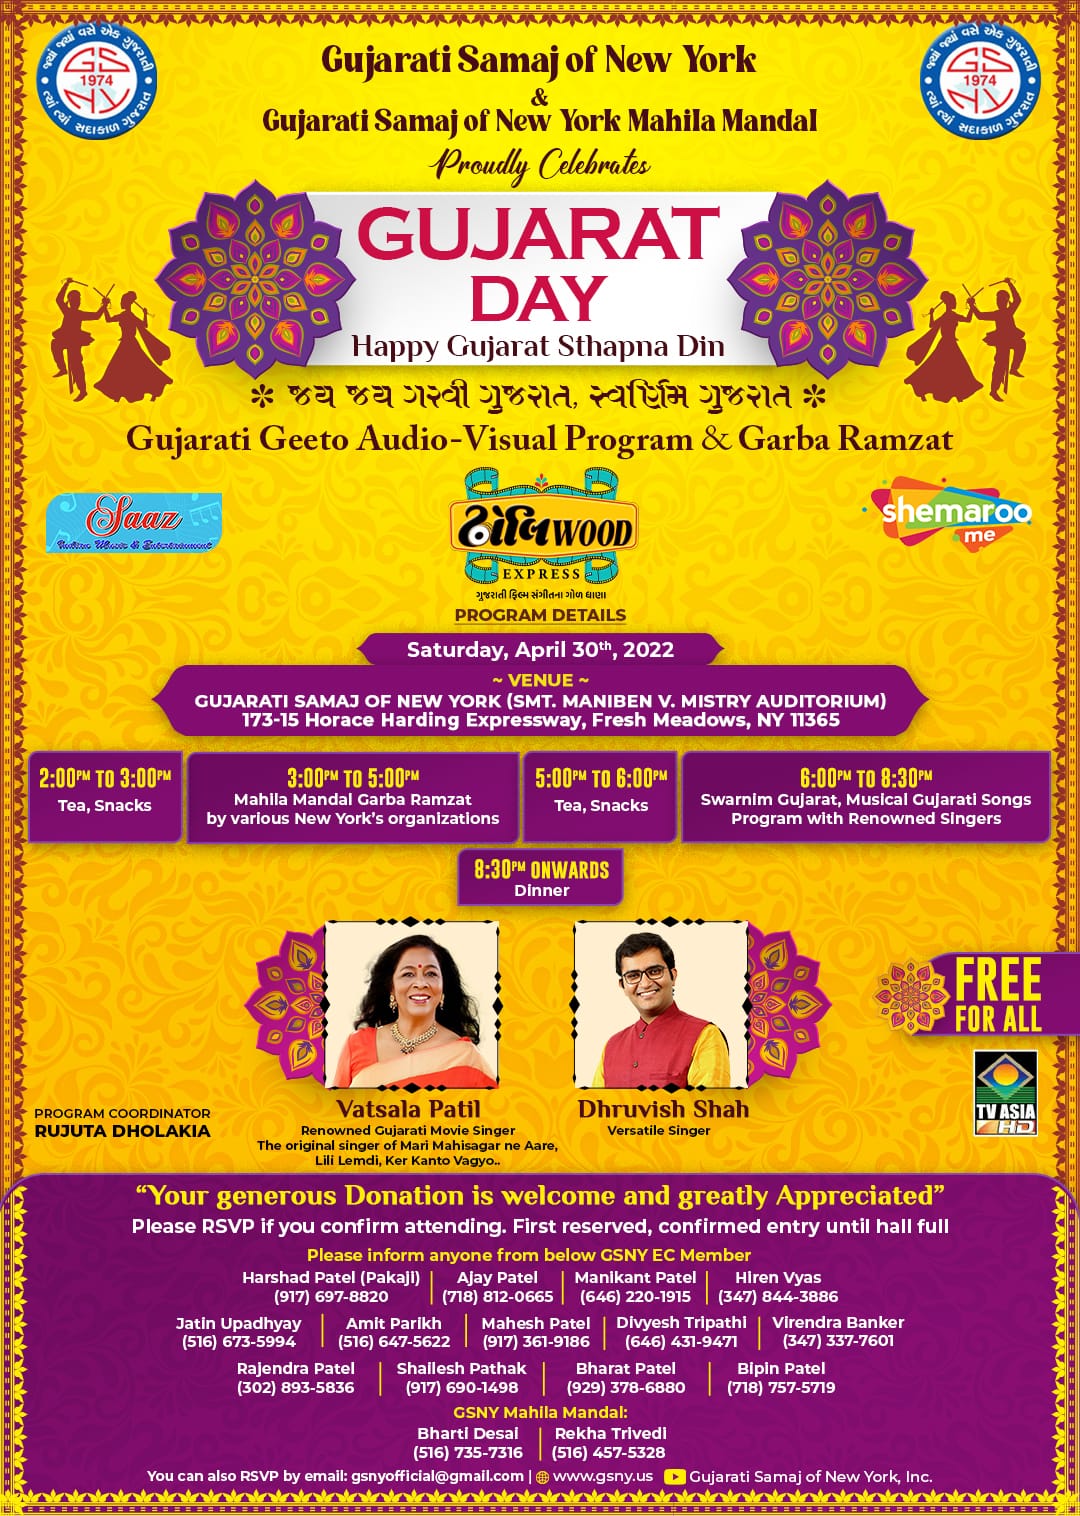 Gujarat Day